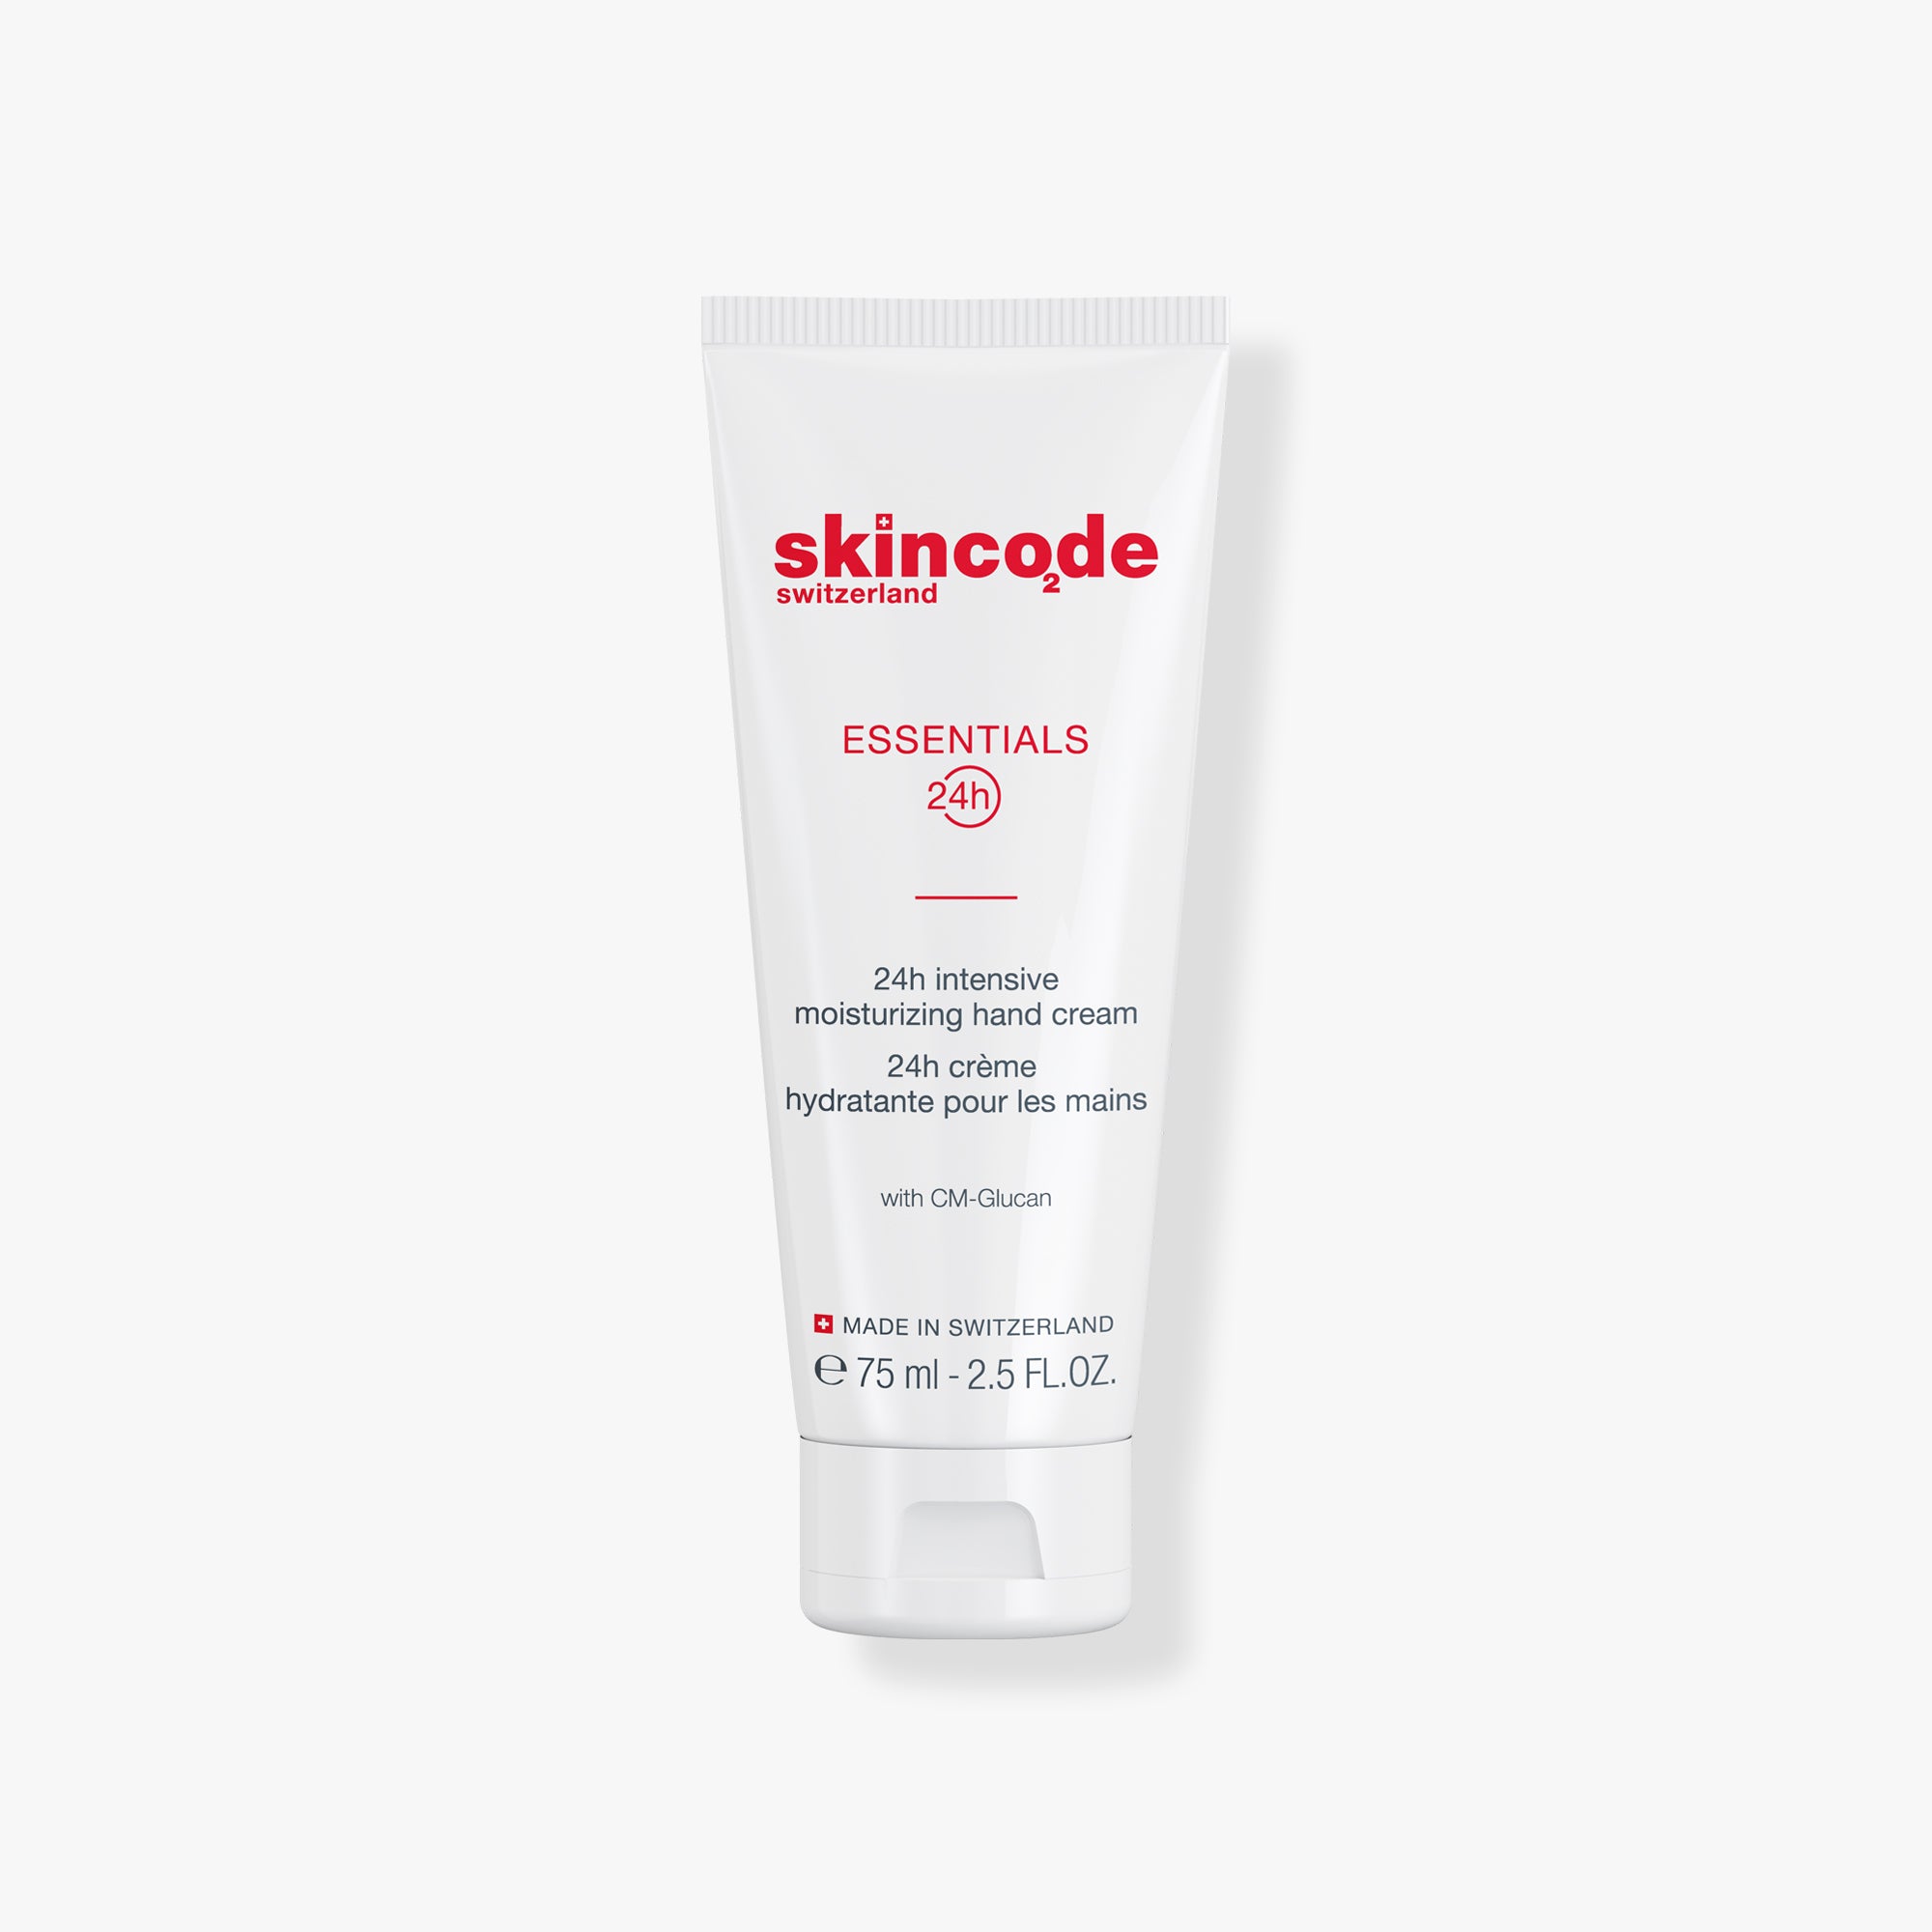 SkinCode Essentials, 24h Intensive Moisturizing Hand Cream